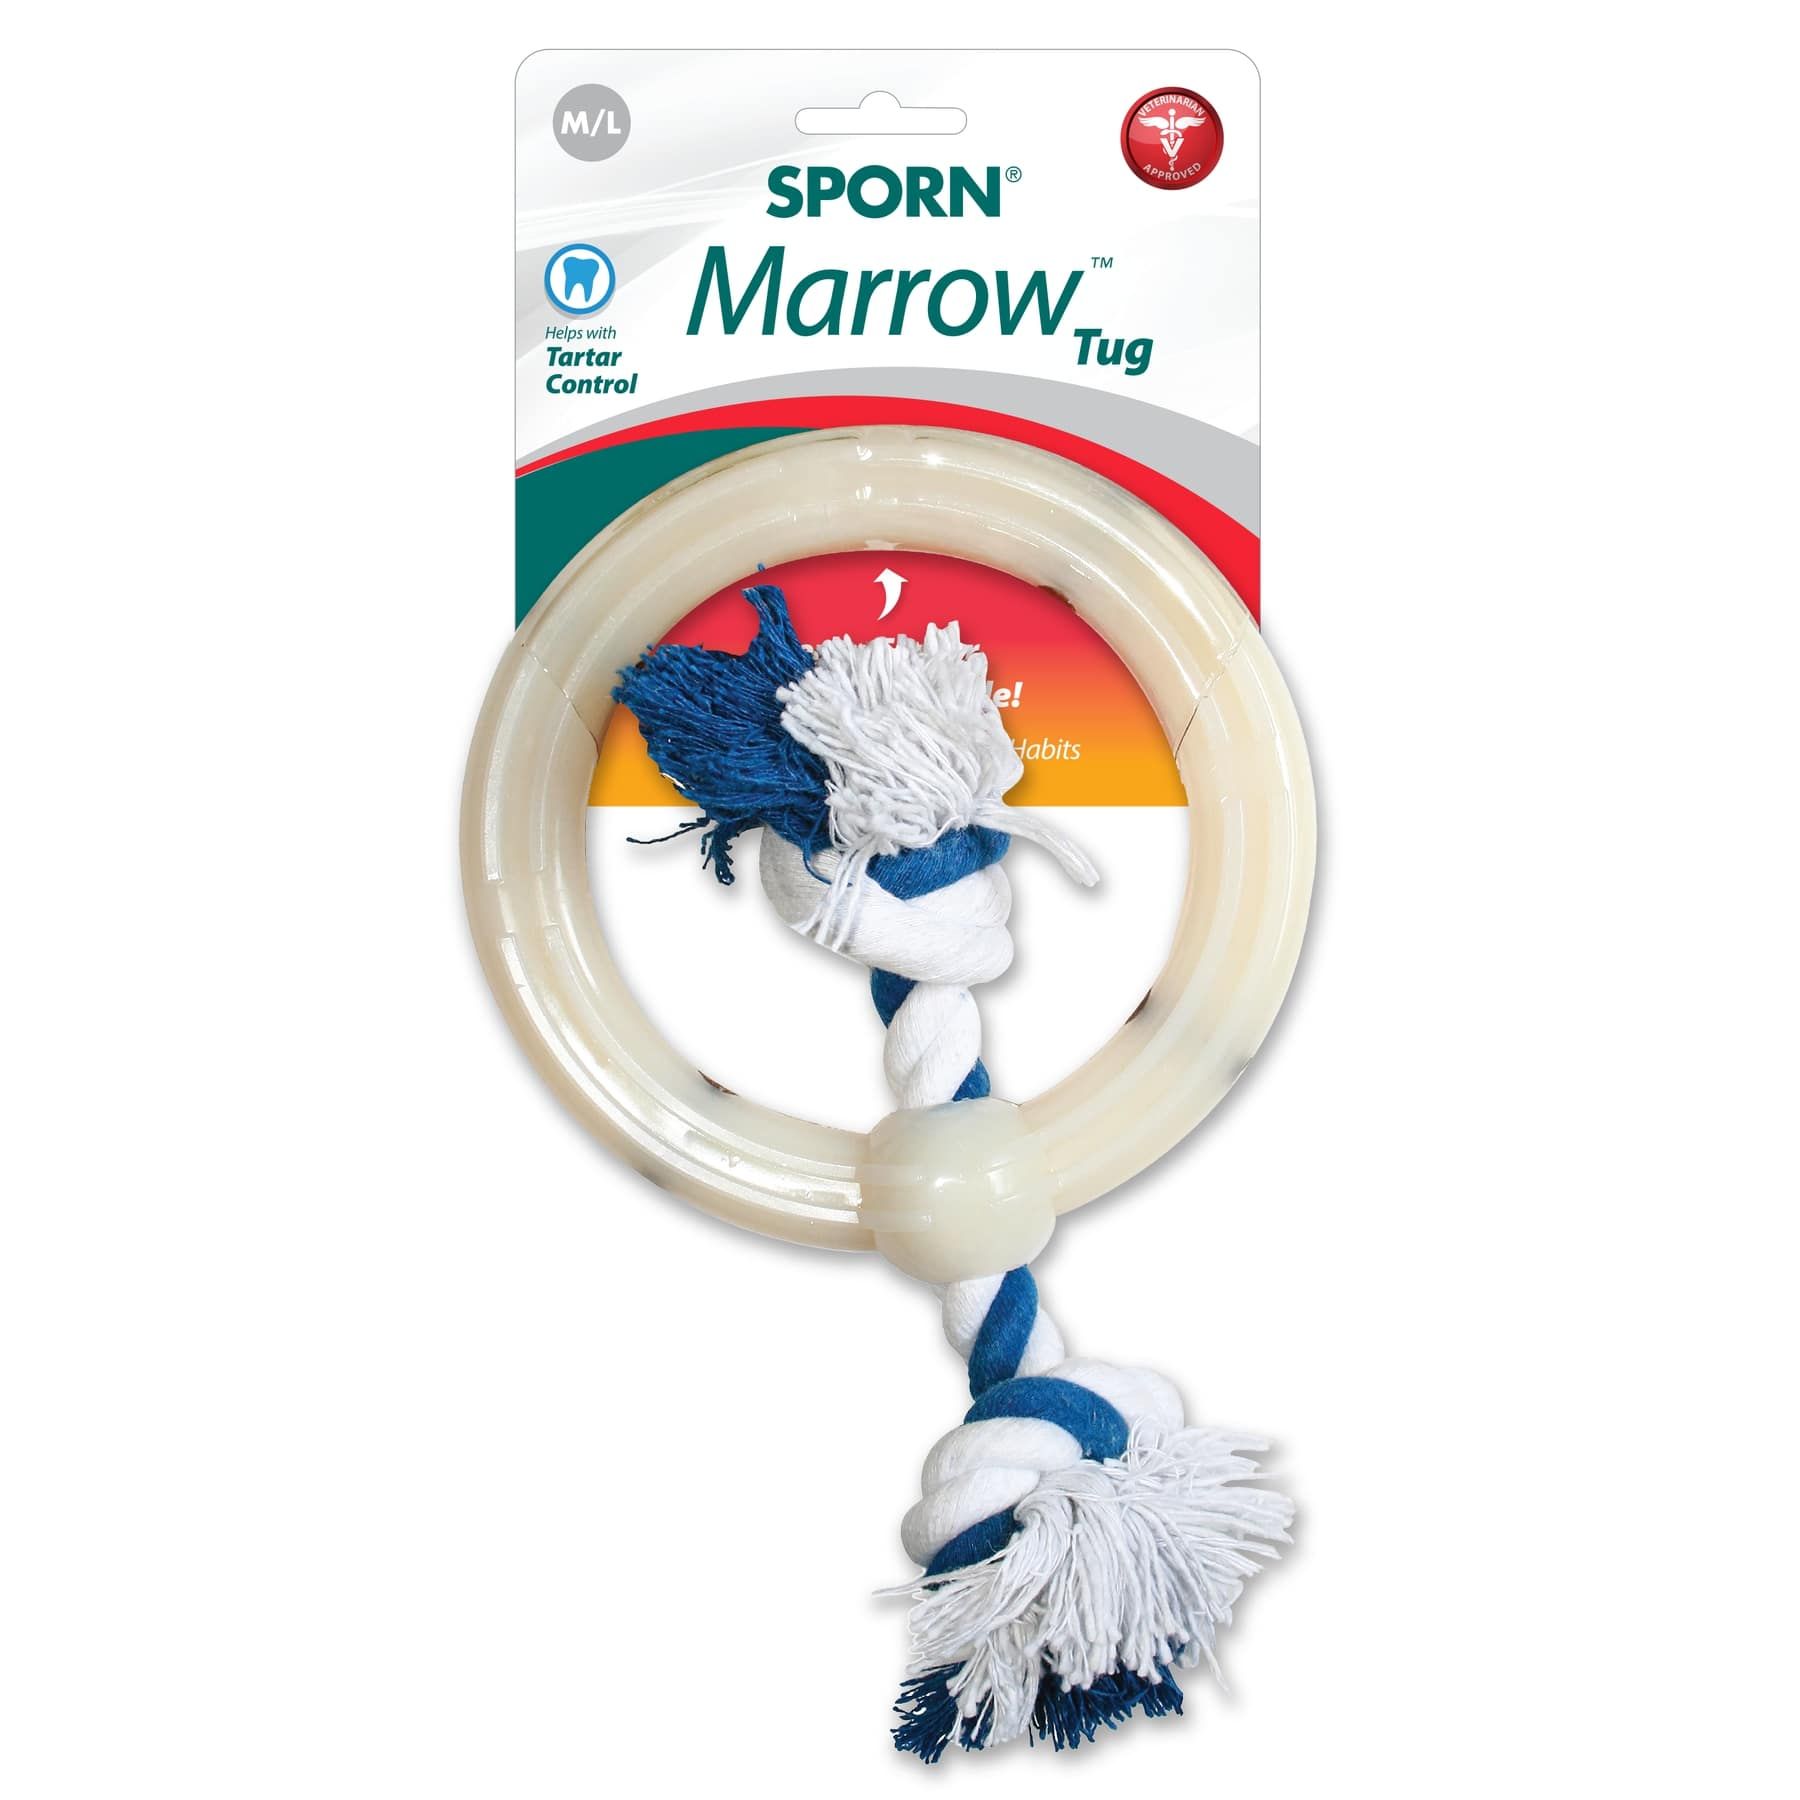 sporn-marrow-tug-package